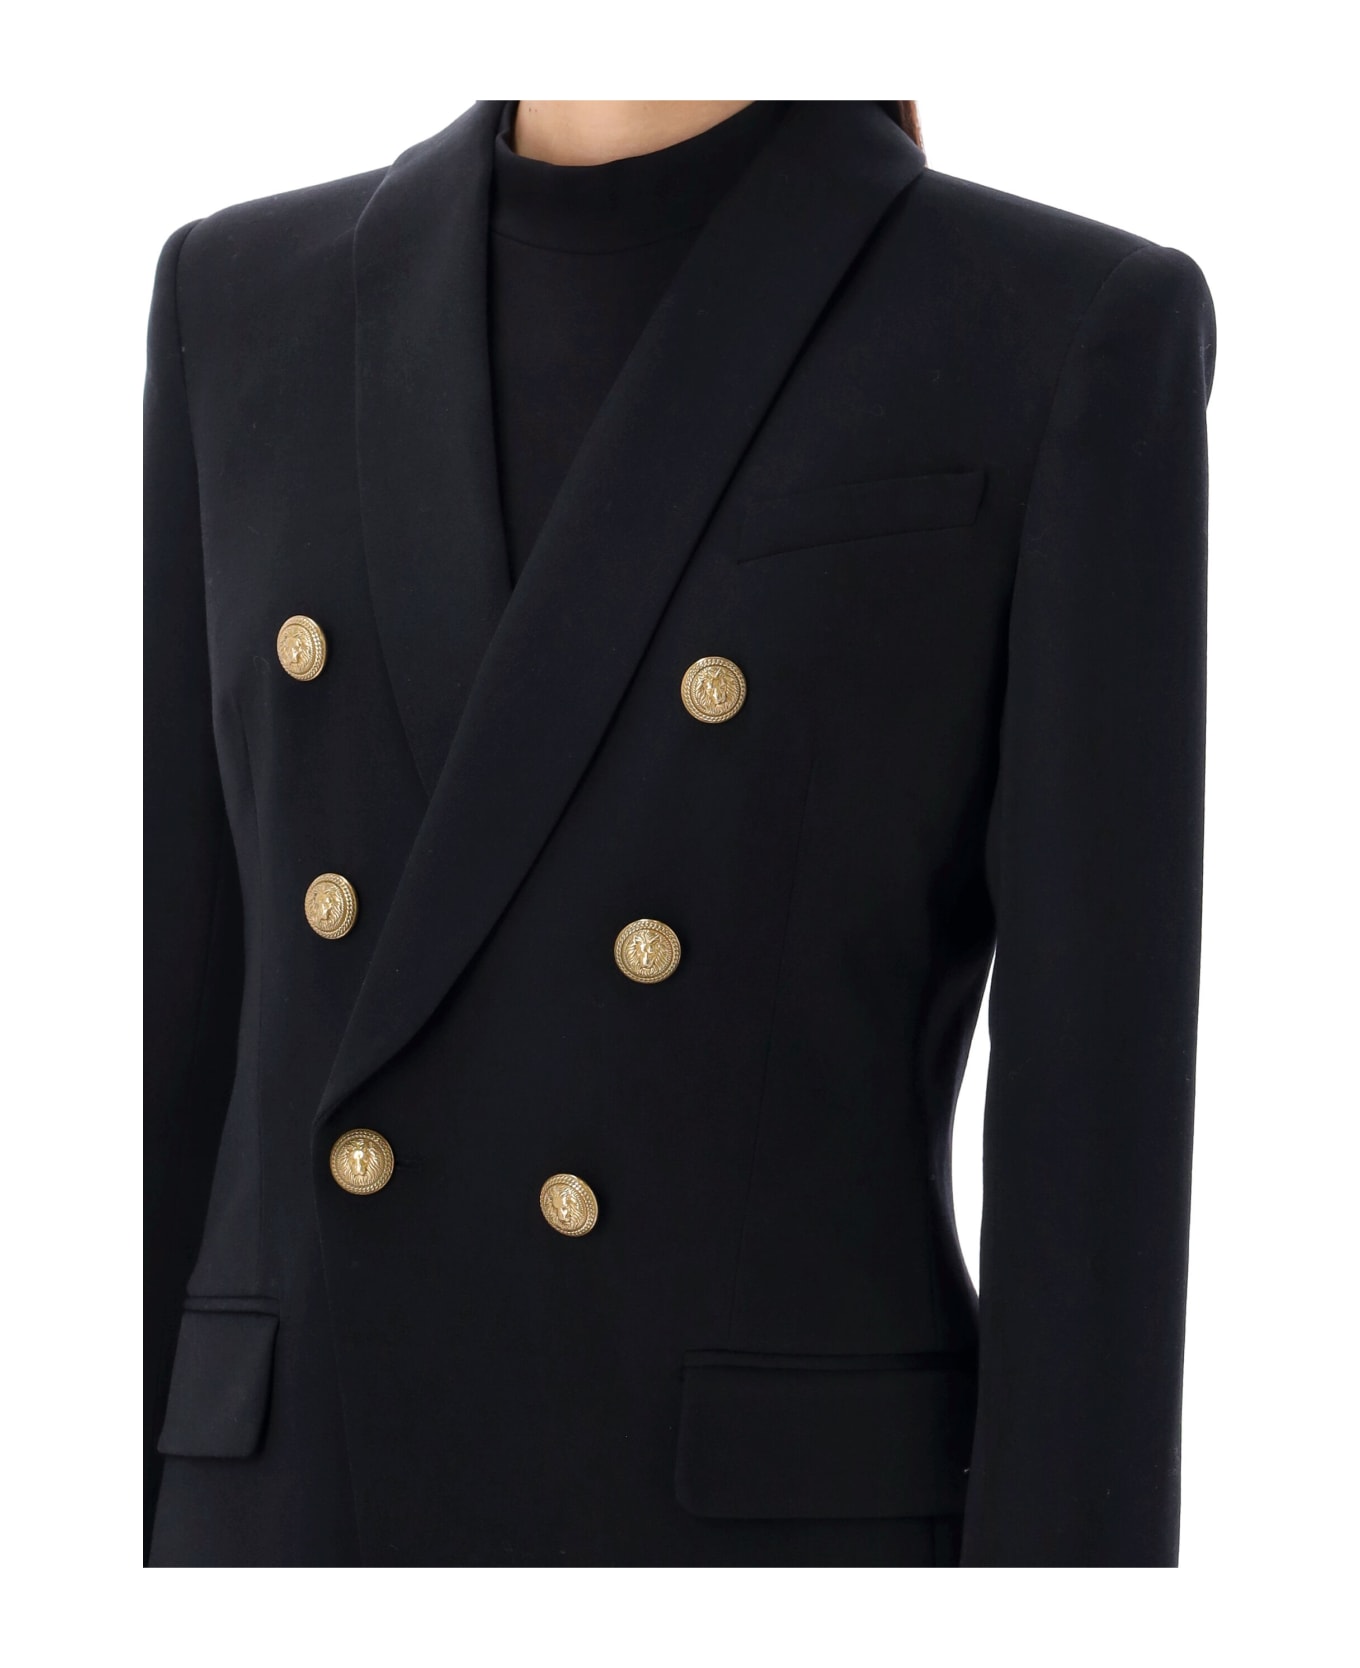 Balmain aquazzura Double-breasted Jacket With Shaped Cut - BLACK